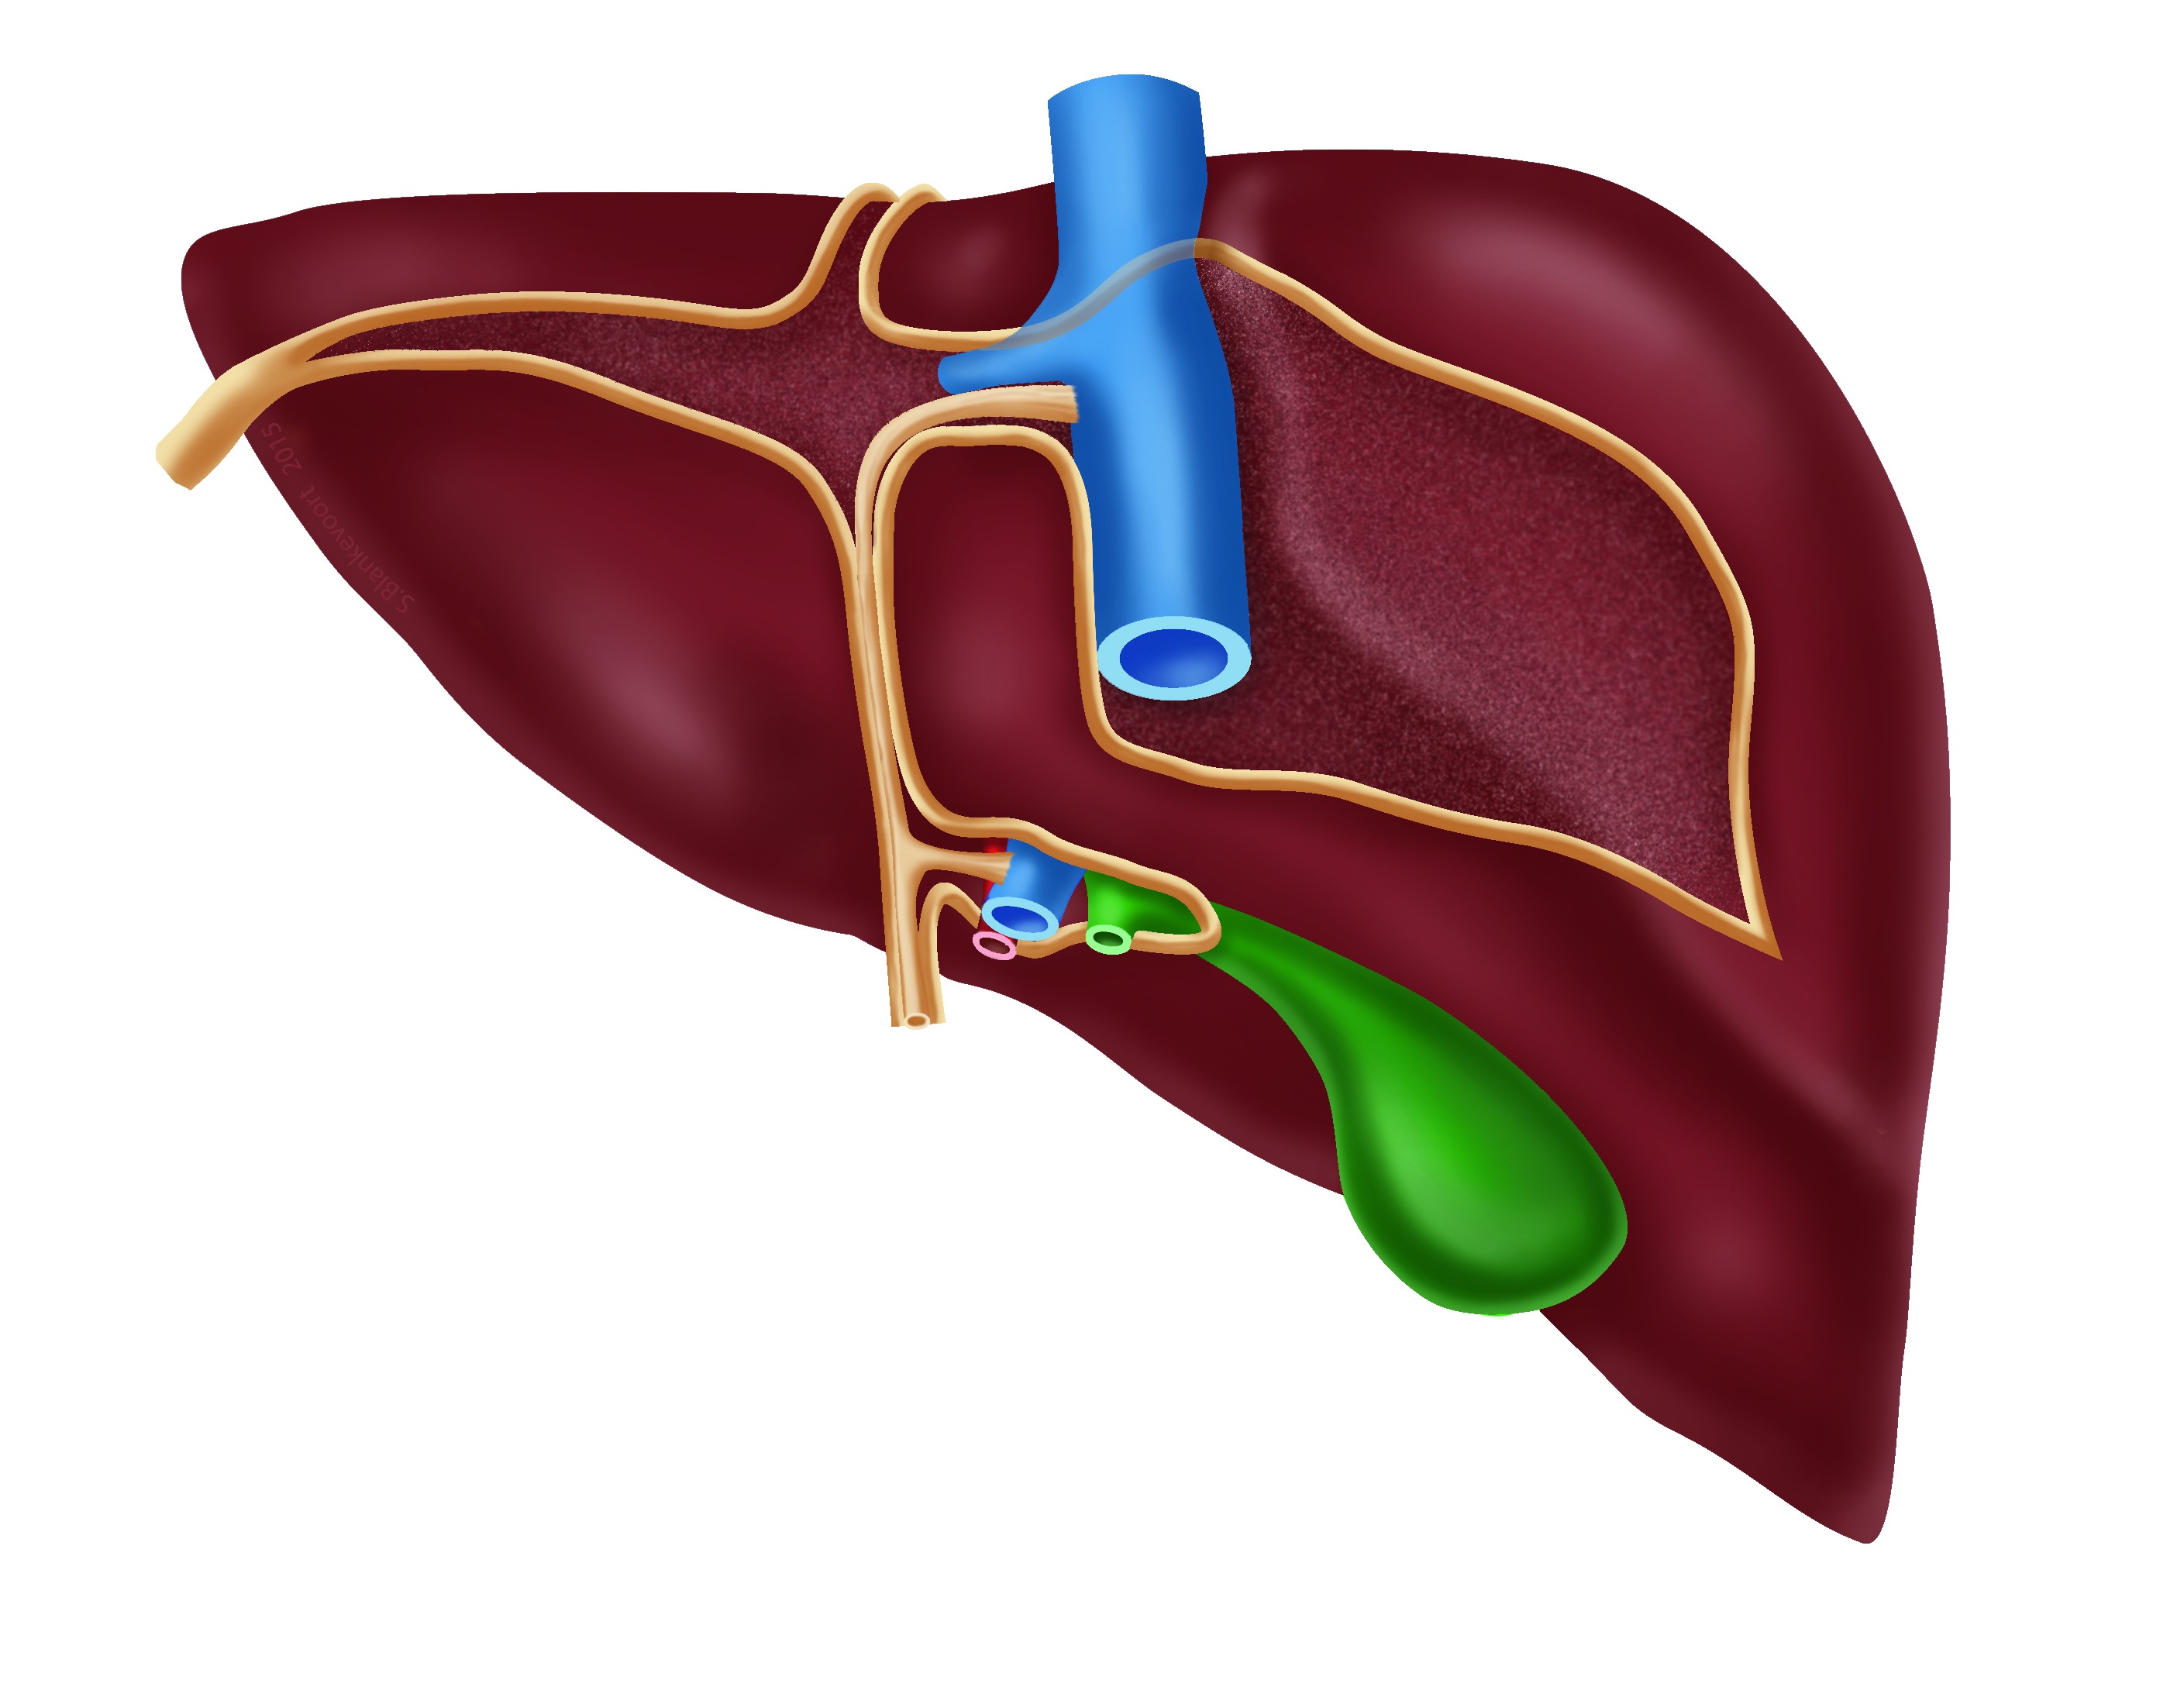 Superior (and posterior) view postnatal liver